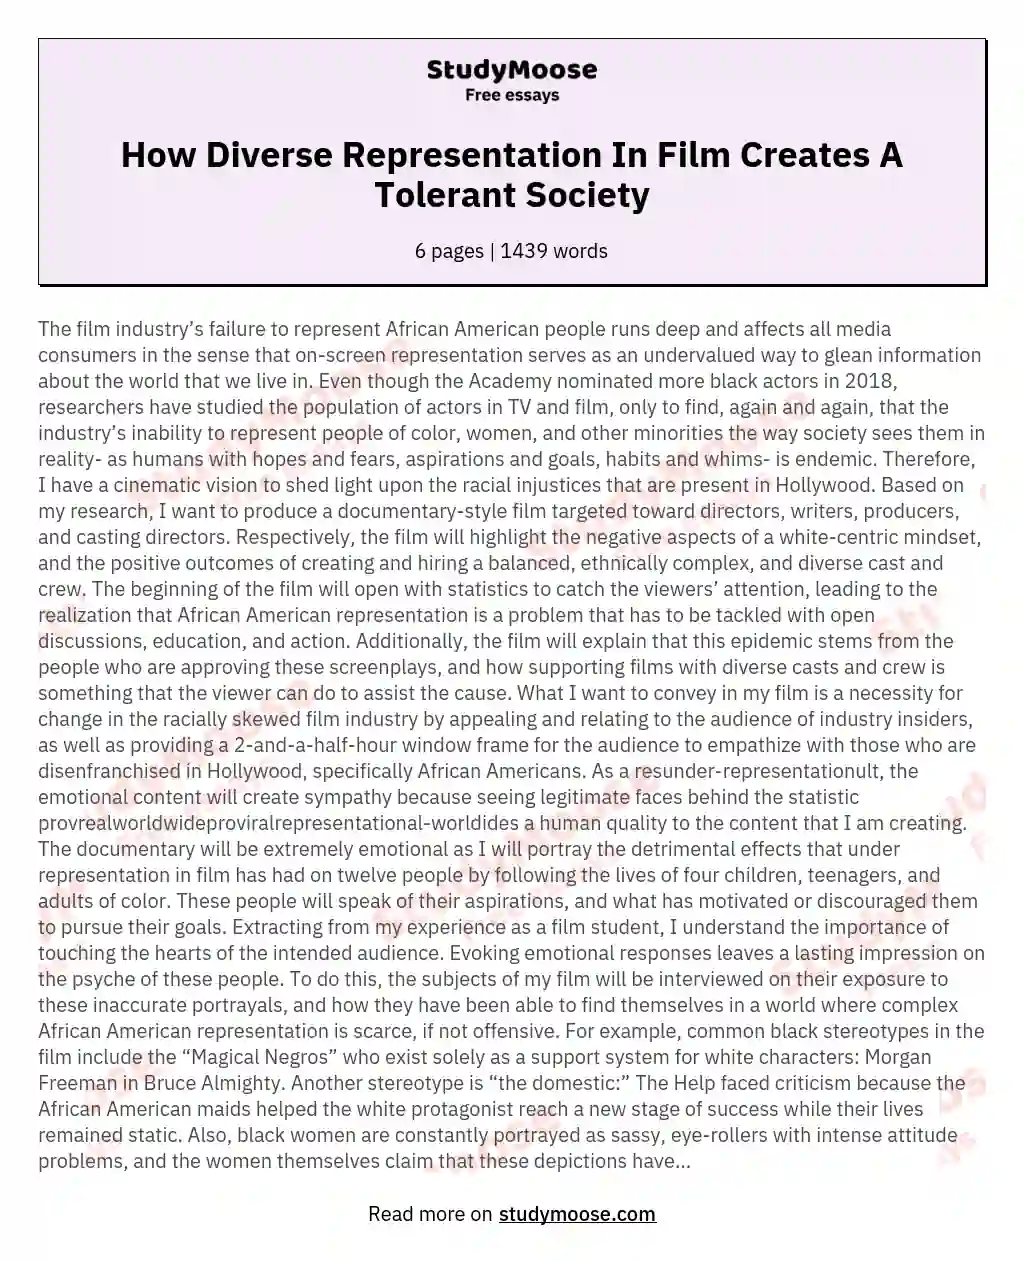 How Diverse Representation In Film Creates A Tolerant Society essay